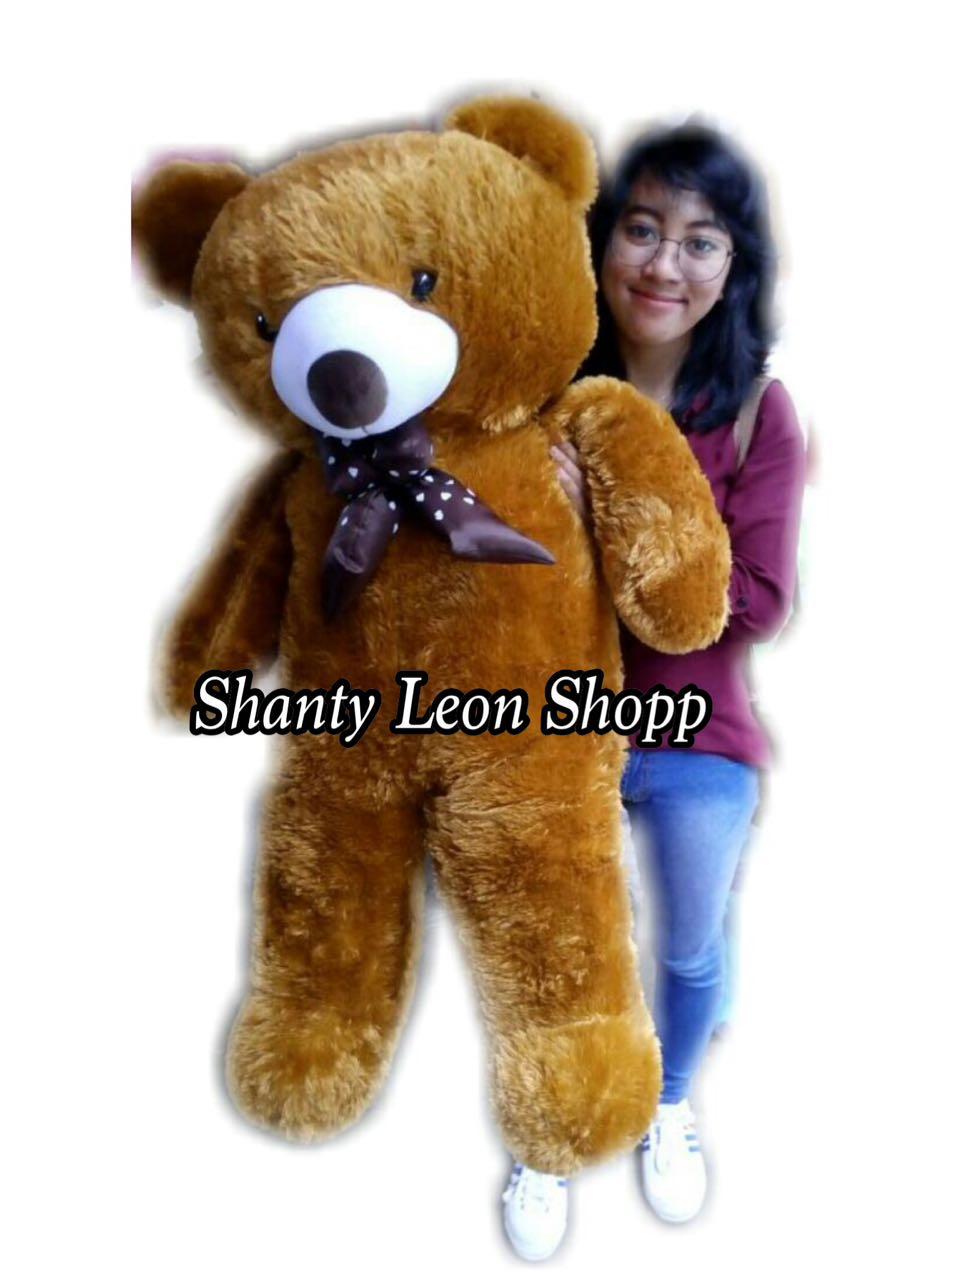 Putri nassa shopp Boneka Teddy Bear Besar Ukuran 1 M